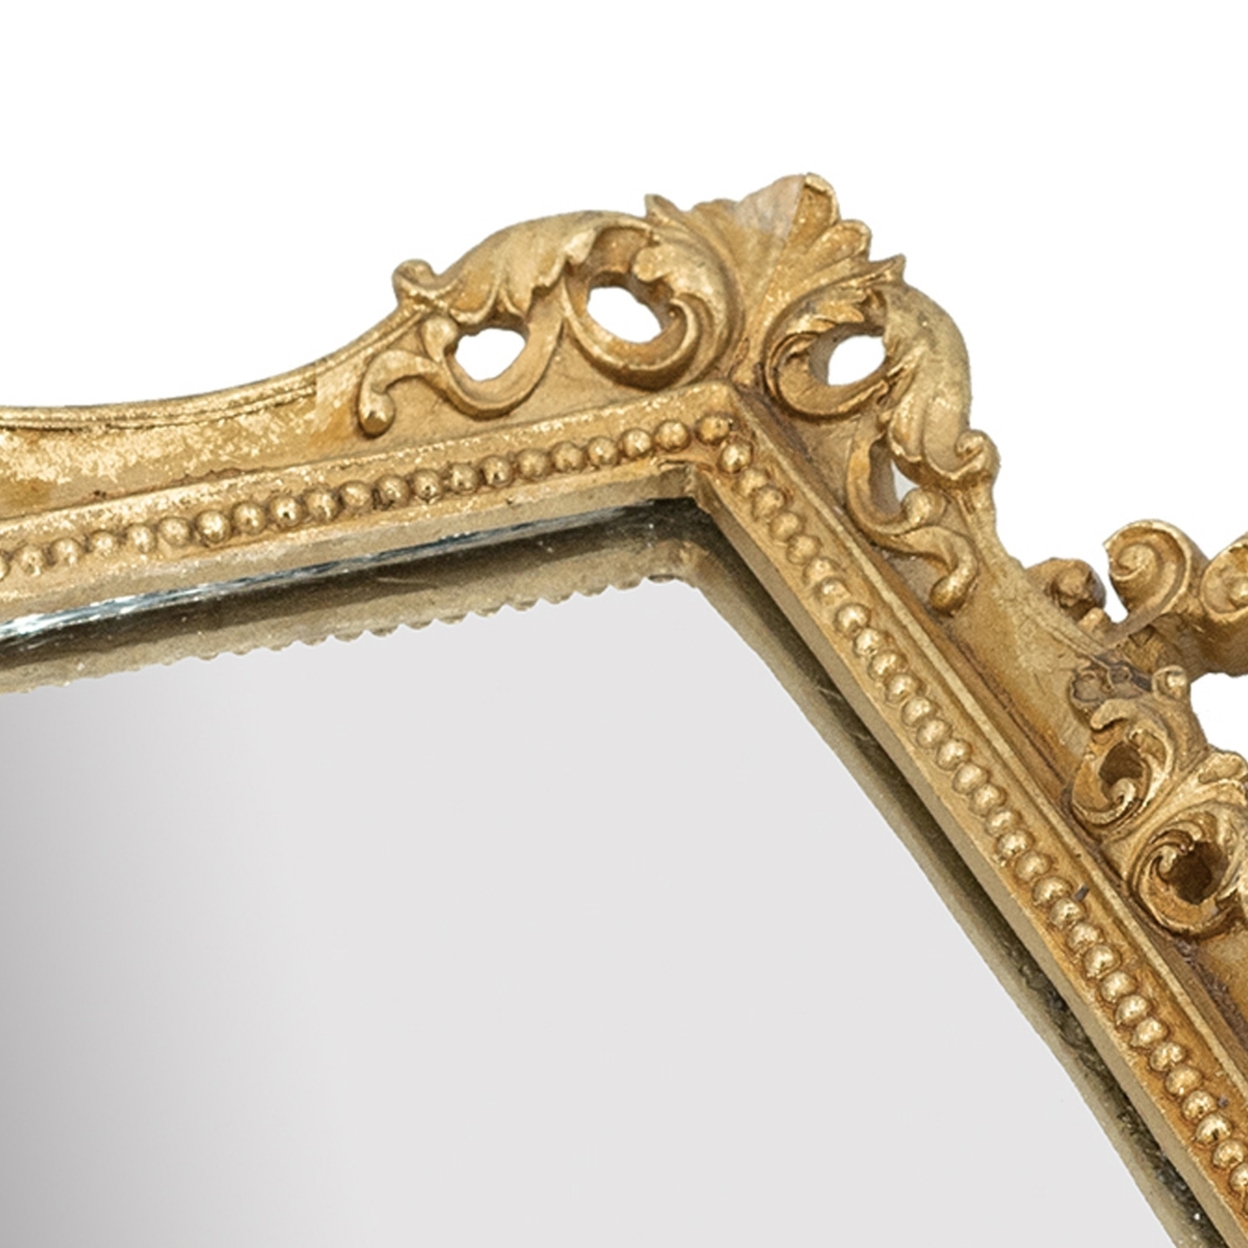 16 Inch Serving Tray, Decorative, Mirrored Bottom, Carved Gold Frame- Saltoro Sherpi